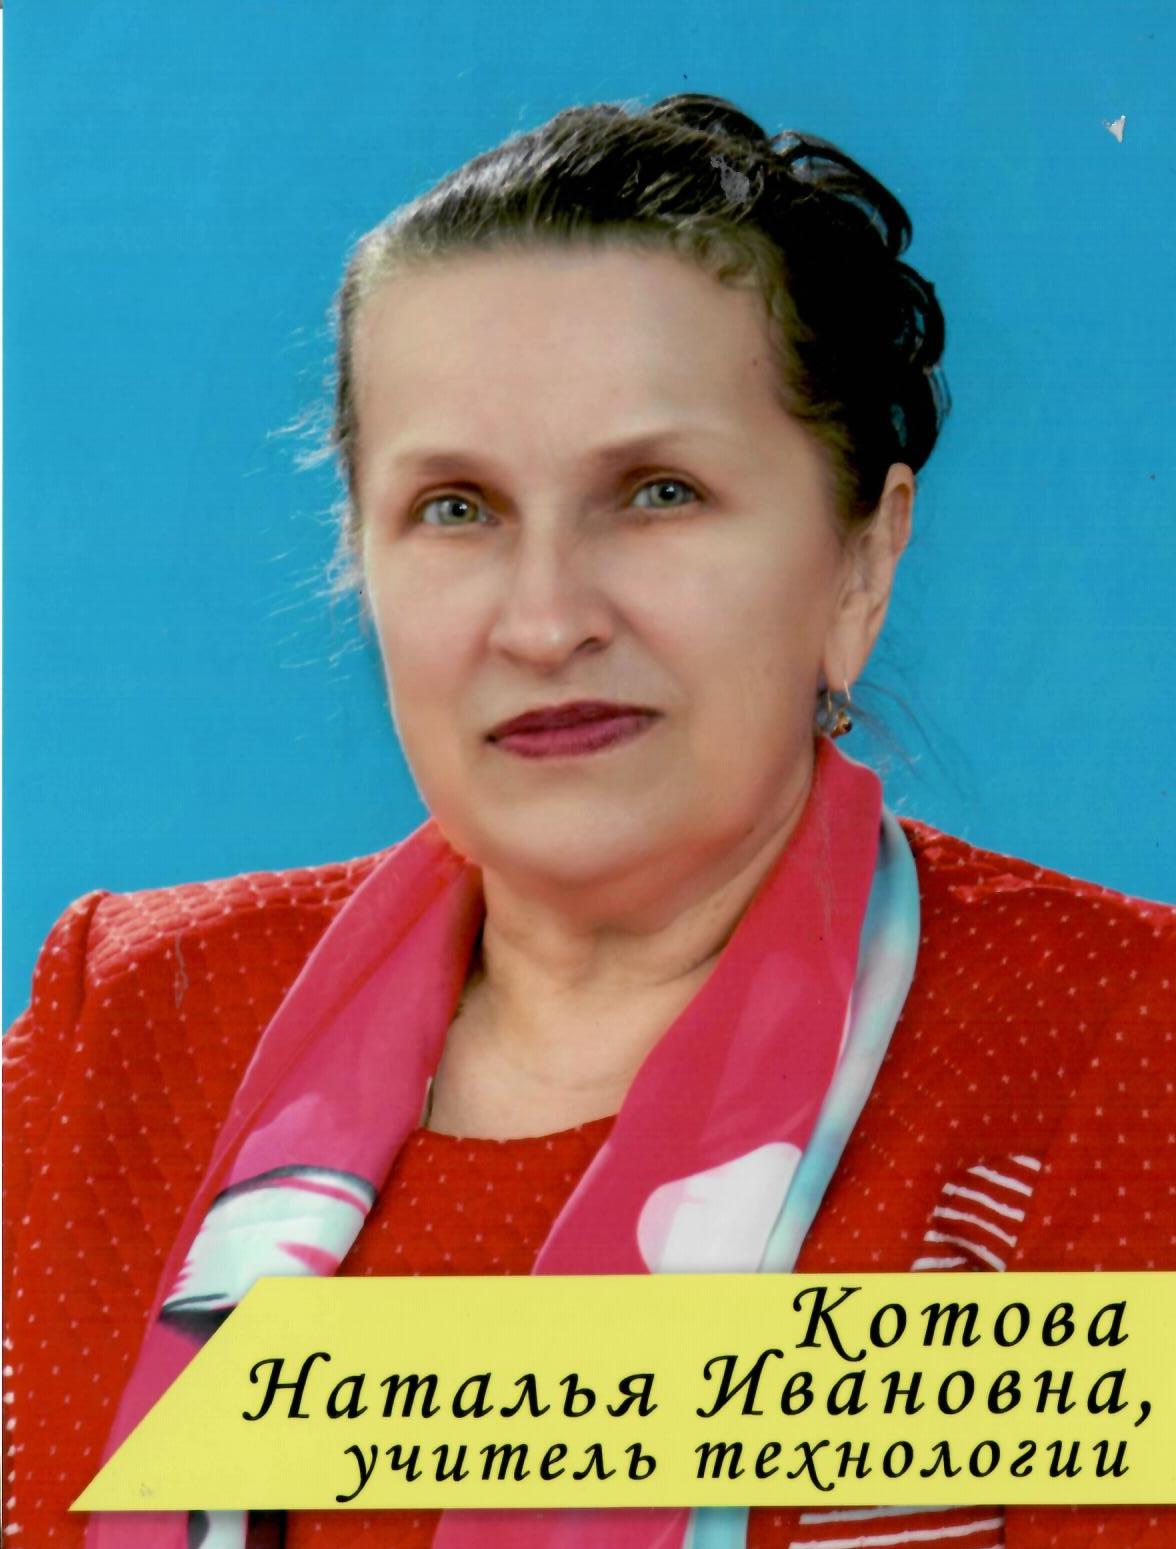 Котова Наталья Ивановна.